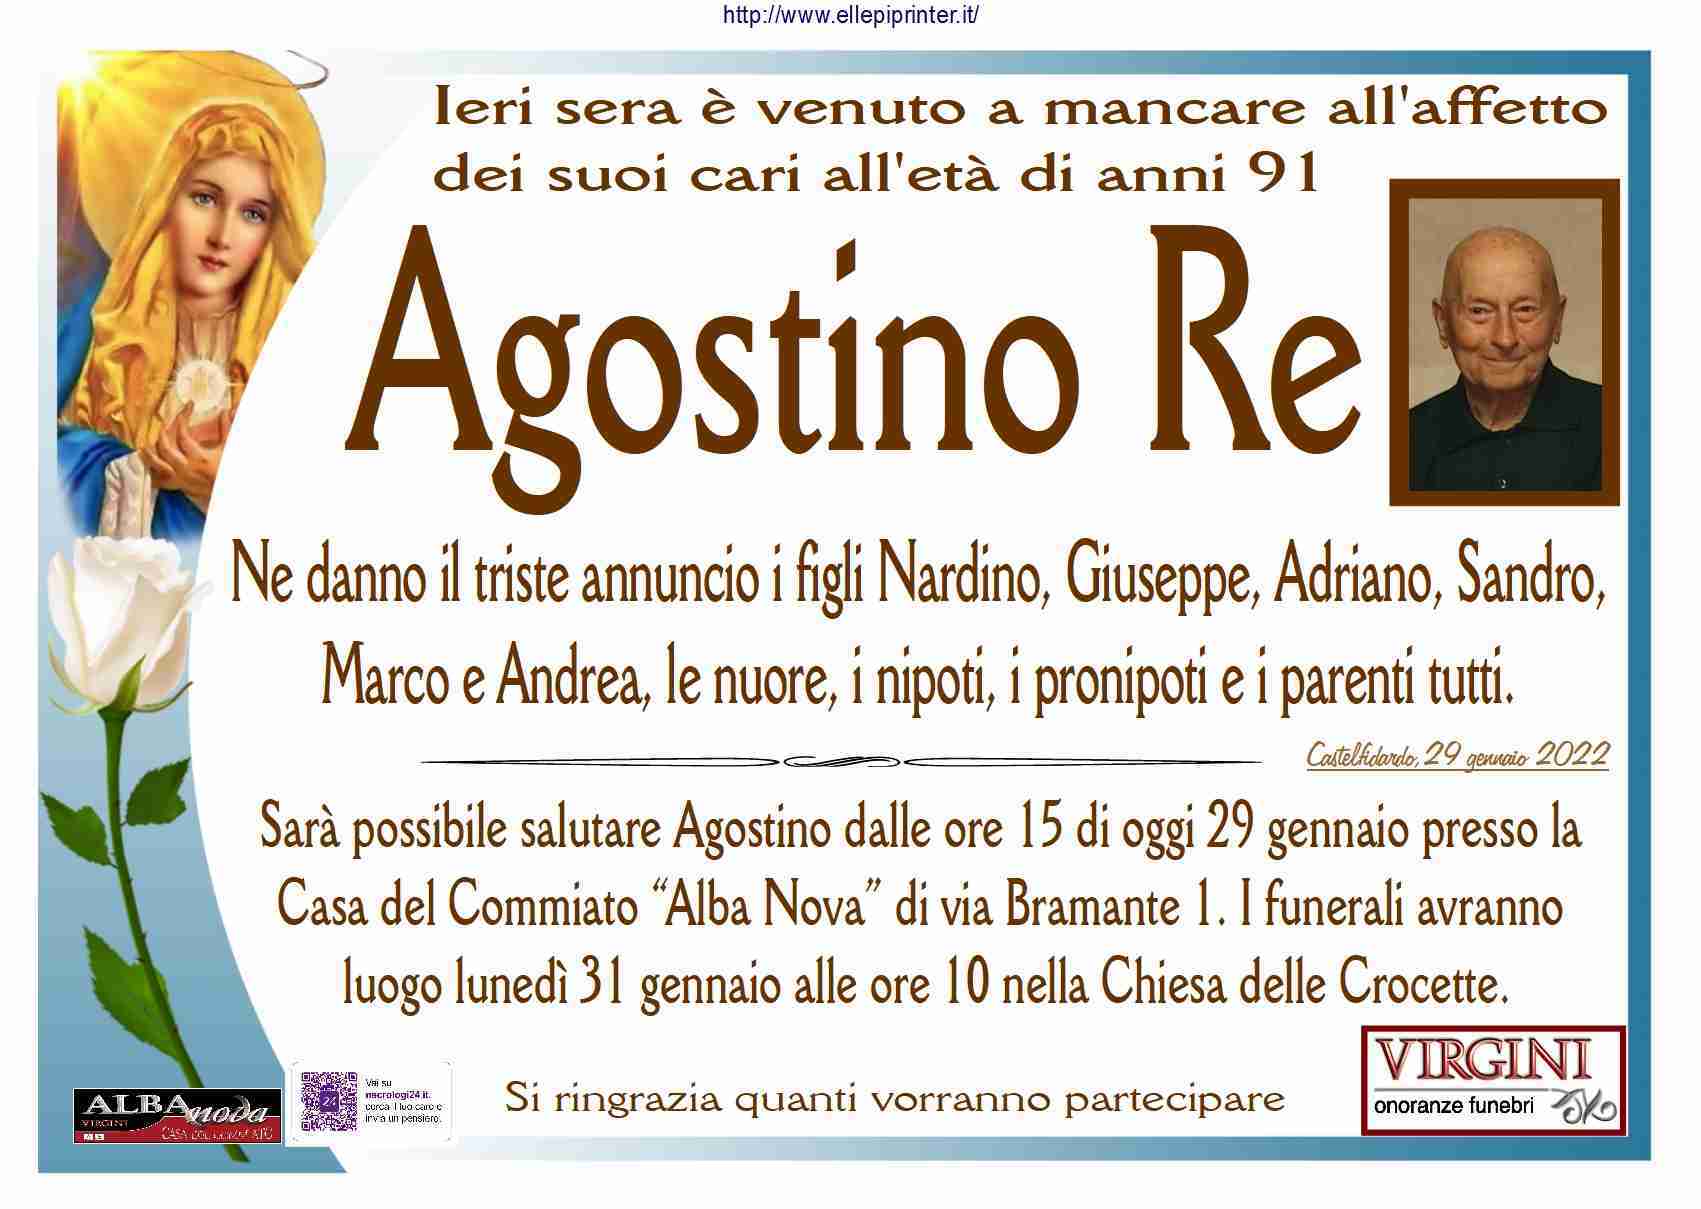 Agostino Re